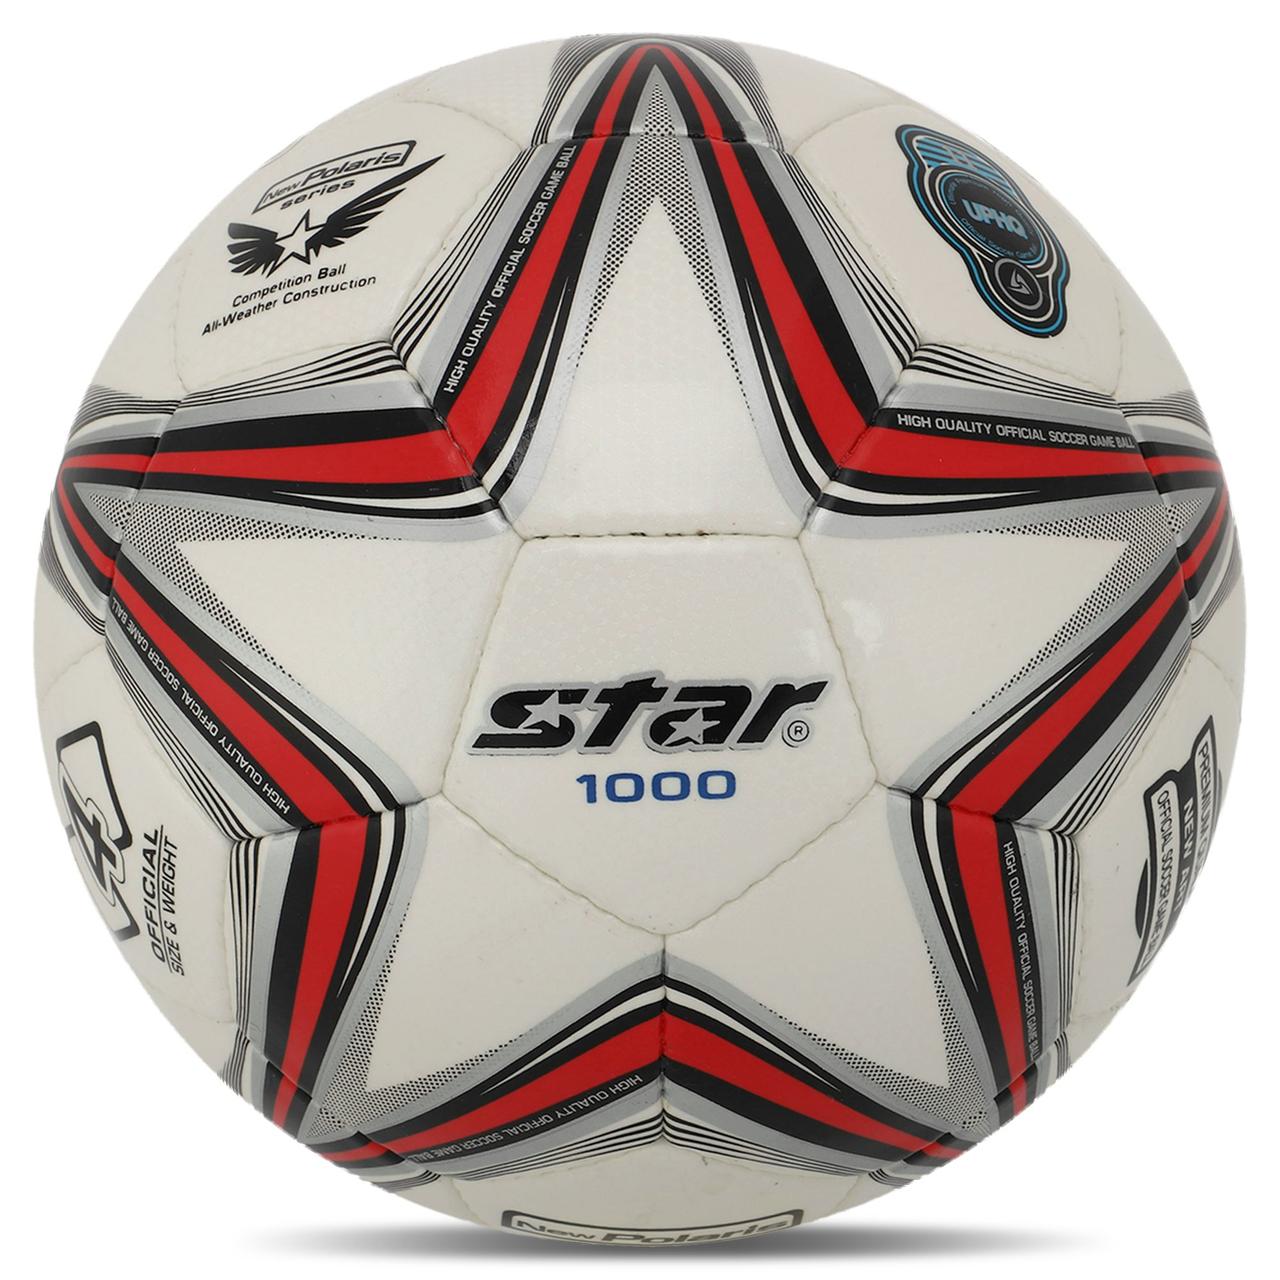 М'яч футбольний STAR NEW POLARIS 1000 SB374 No4 Composite Leather